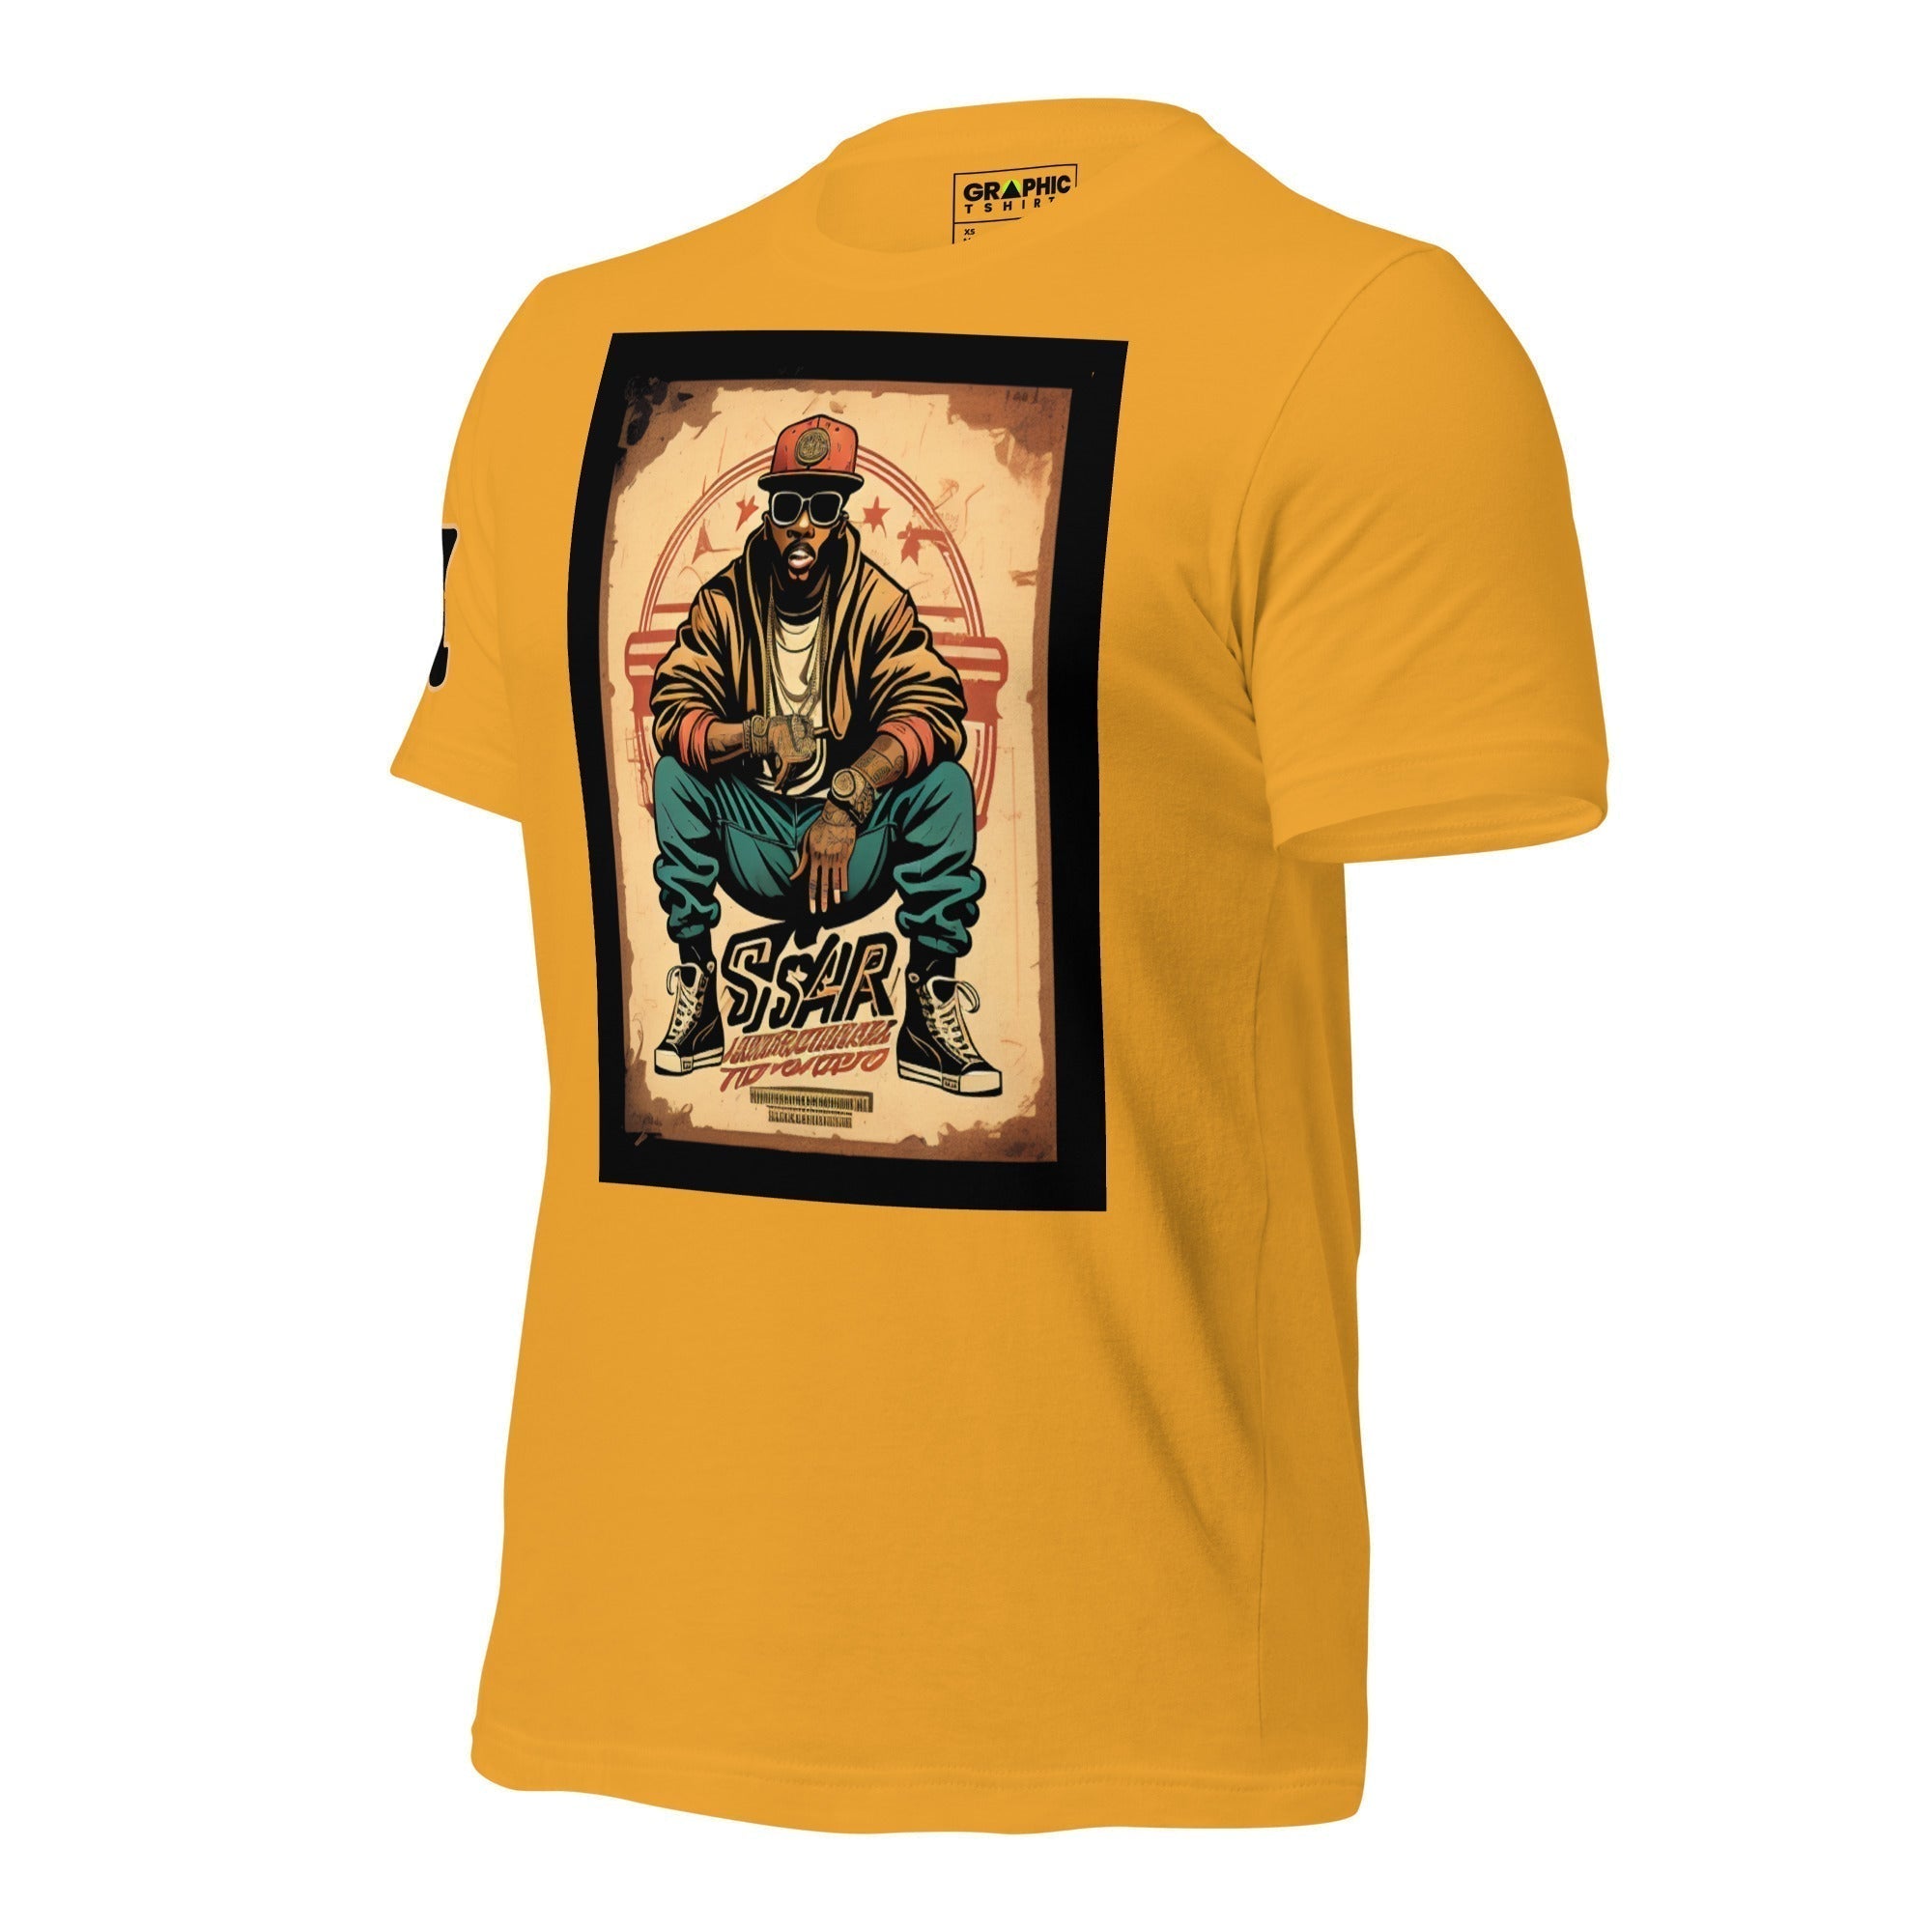 Unisex Crew Neck T-Shirt - Vintage Hip Hop Series v.3 - GRAPHIC T-SHIRTS